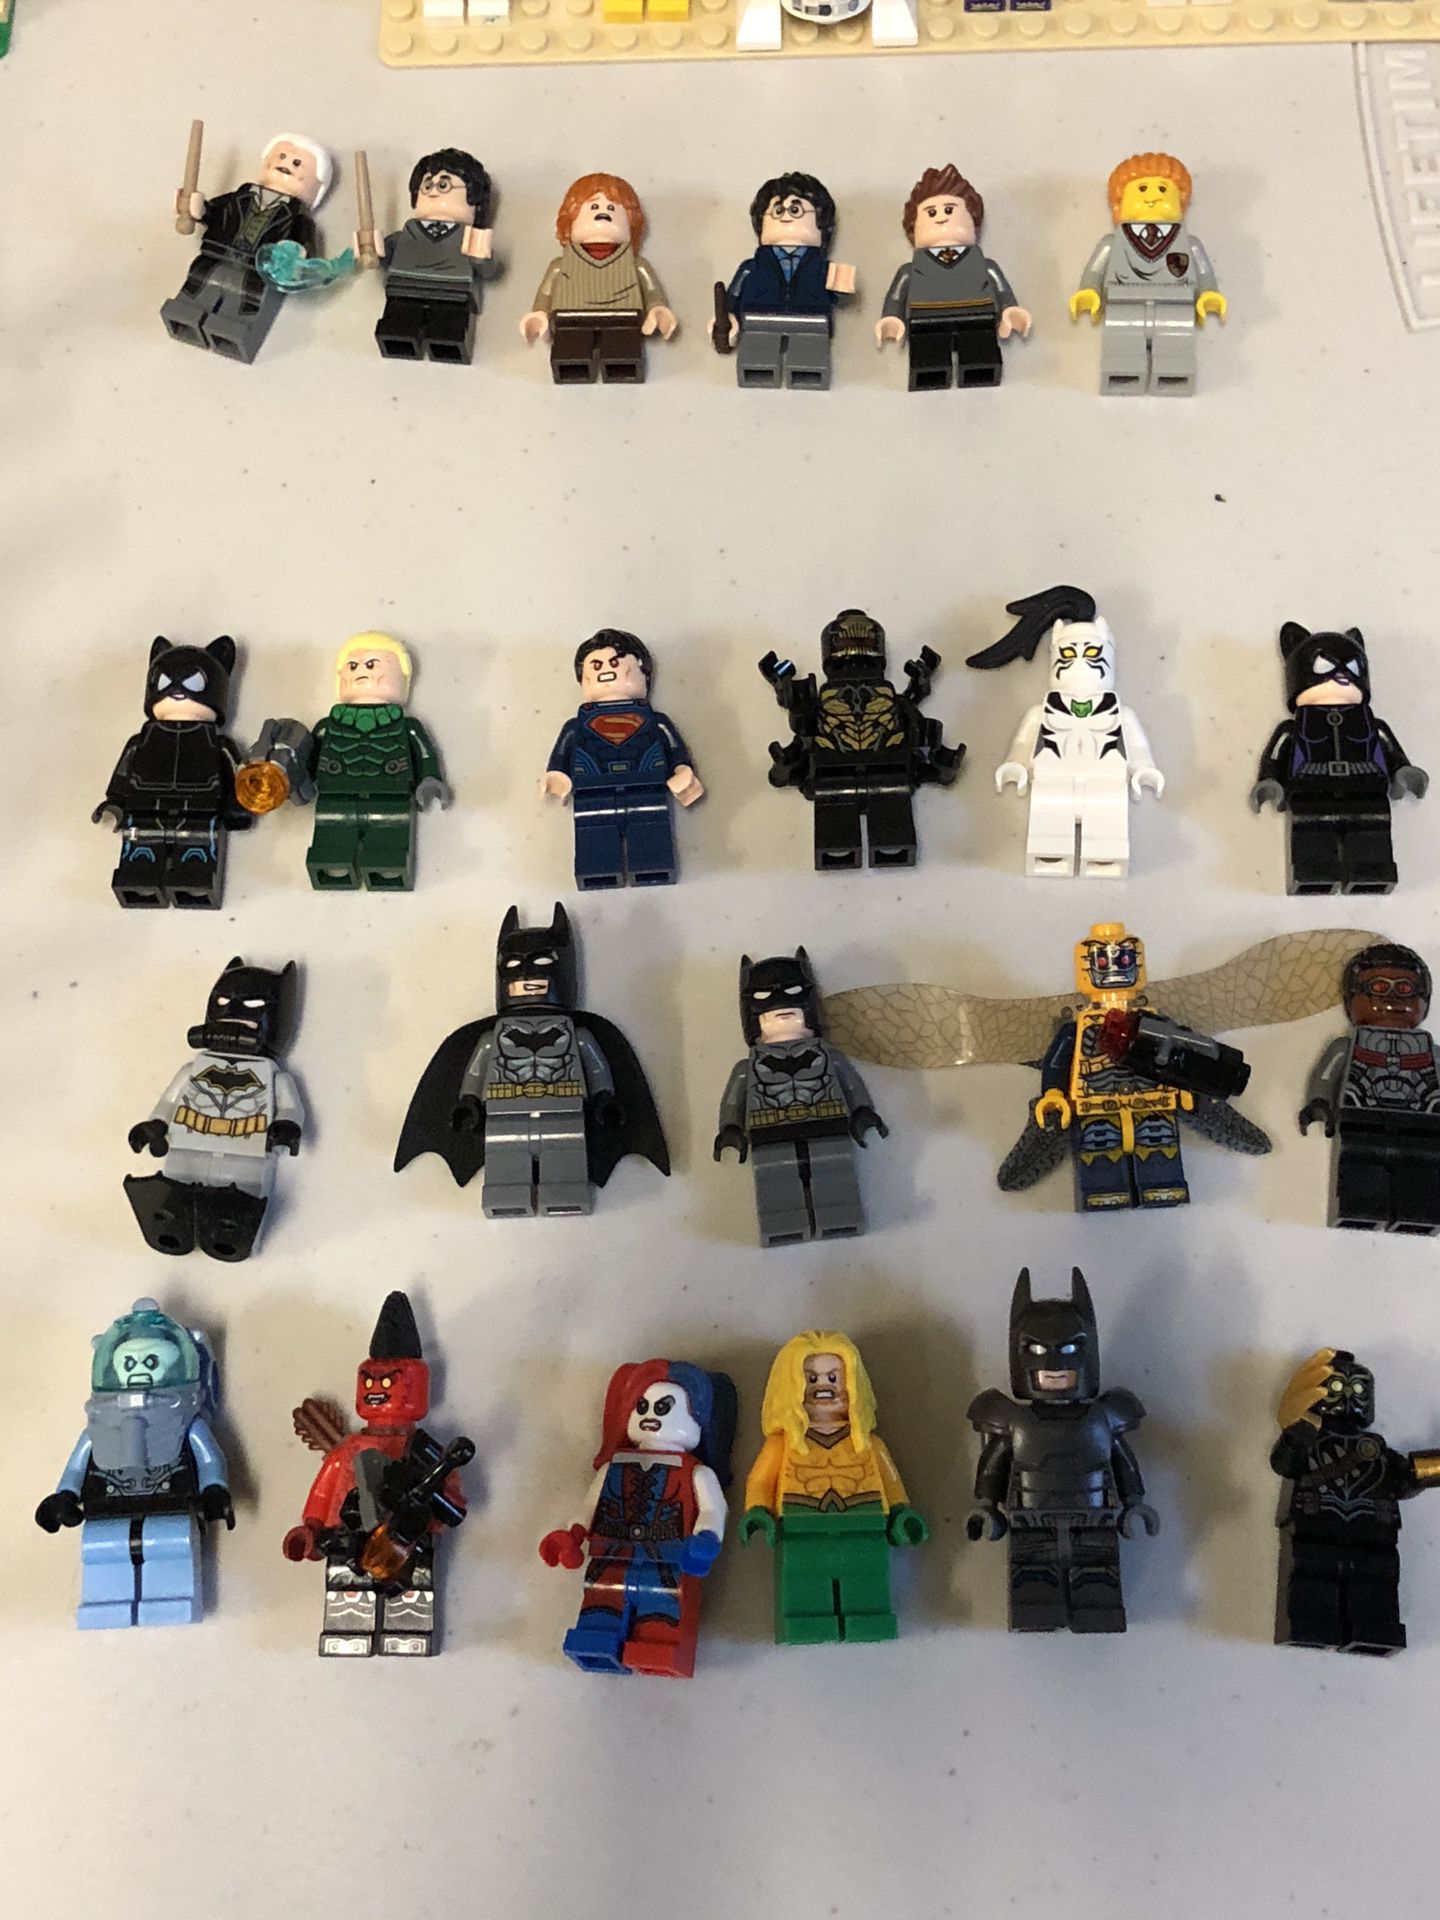 Lego super hero and Harry Potter figures